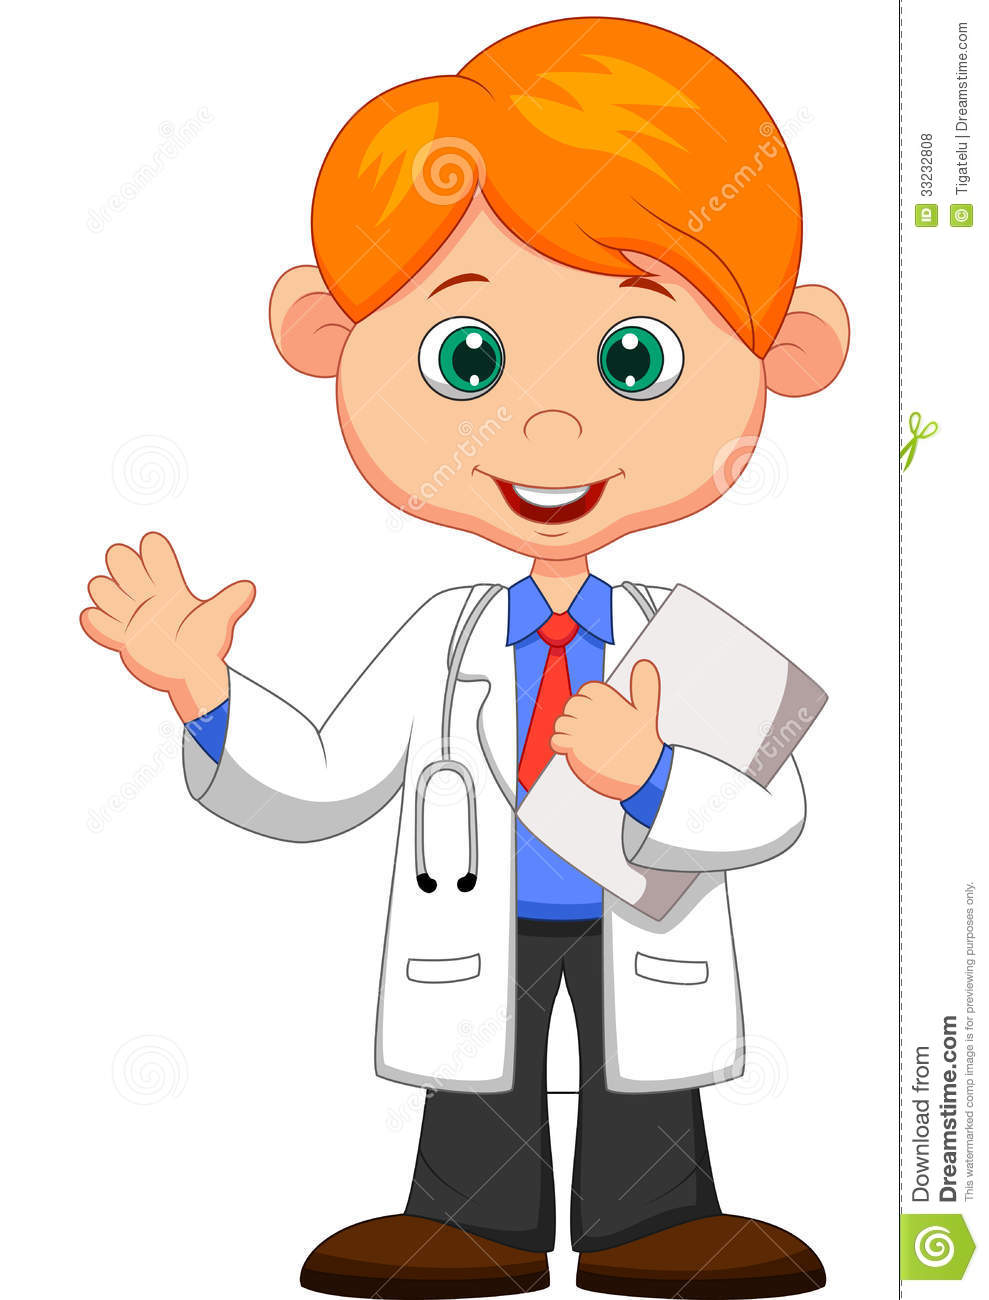 Cute Little Male Doctor Cartoon Waving Hand Royalty Free Stock Photos    